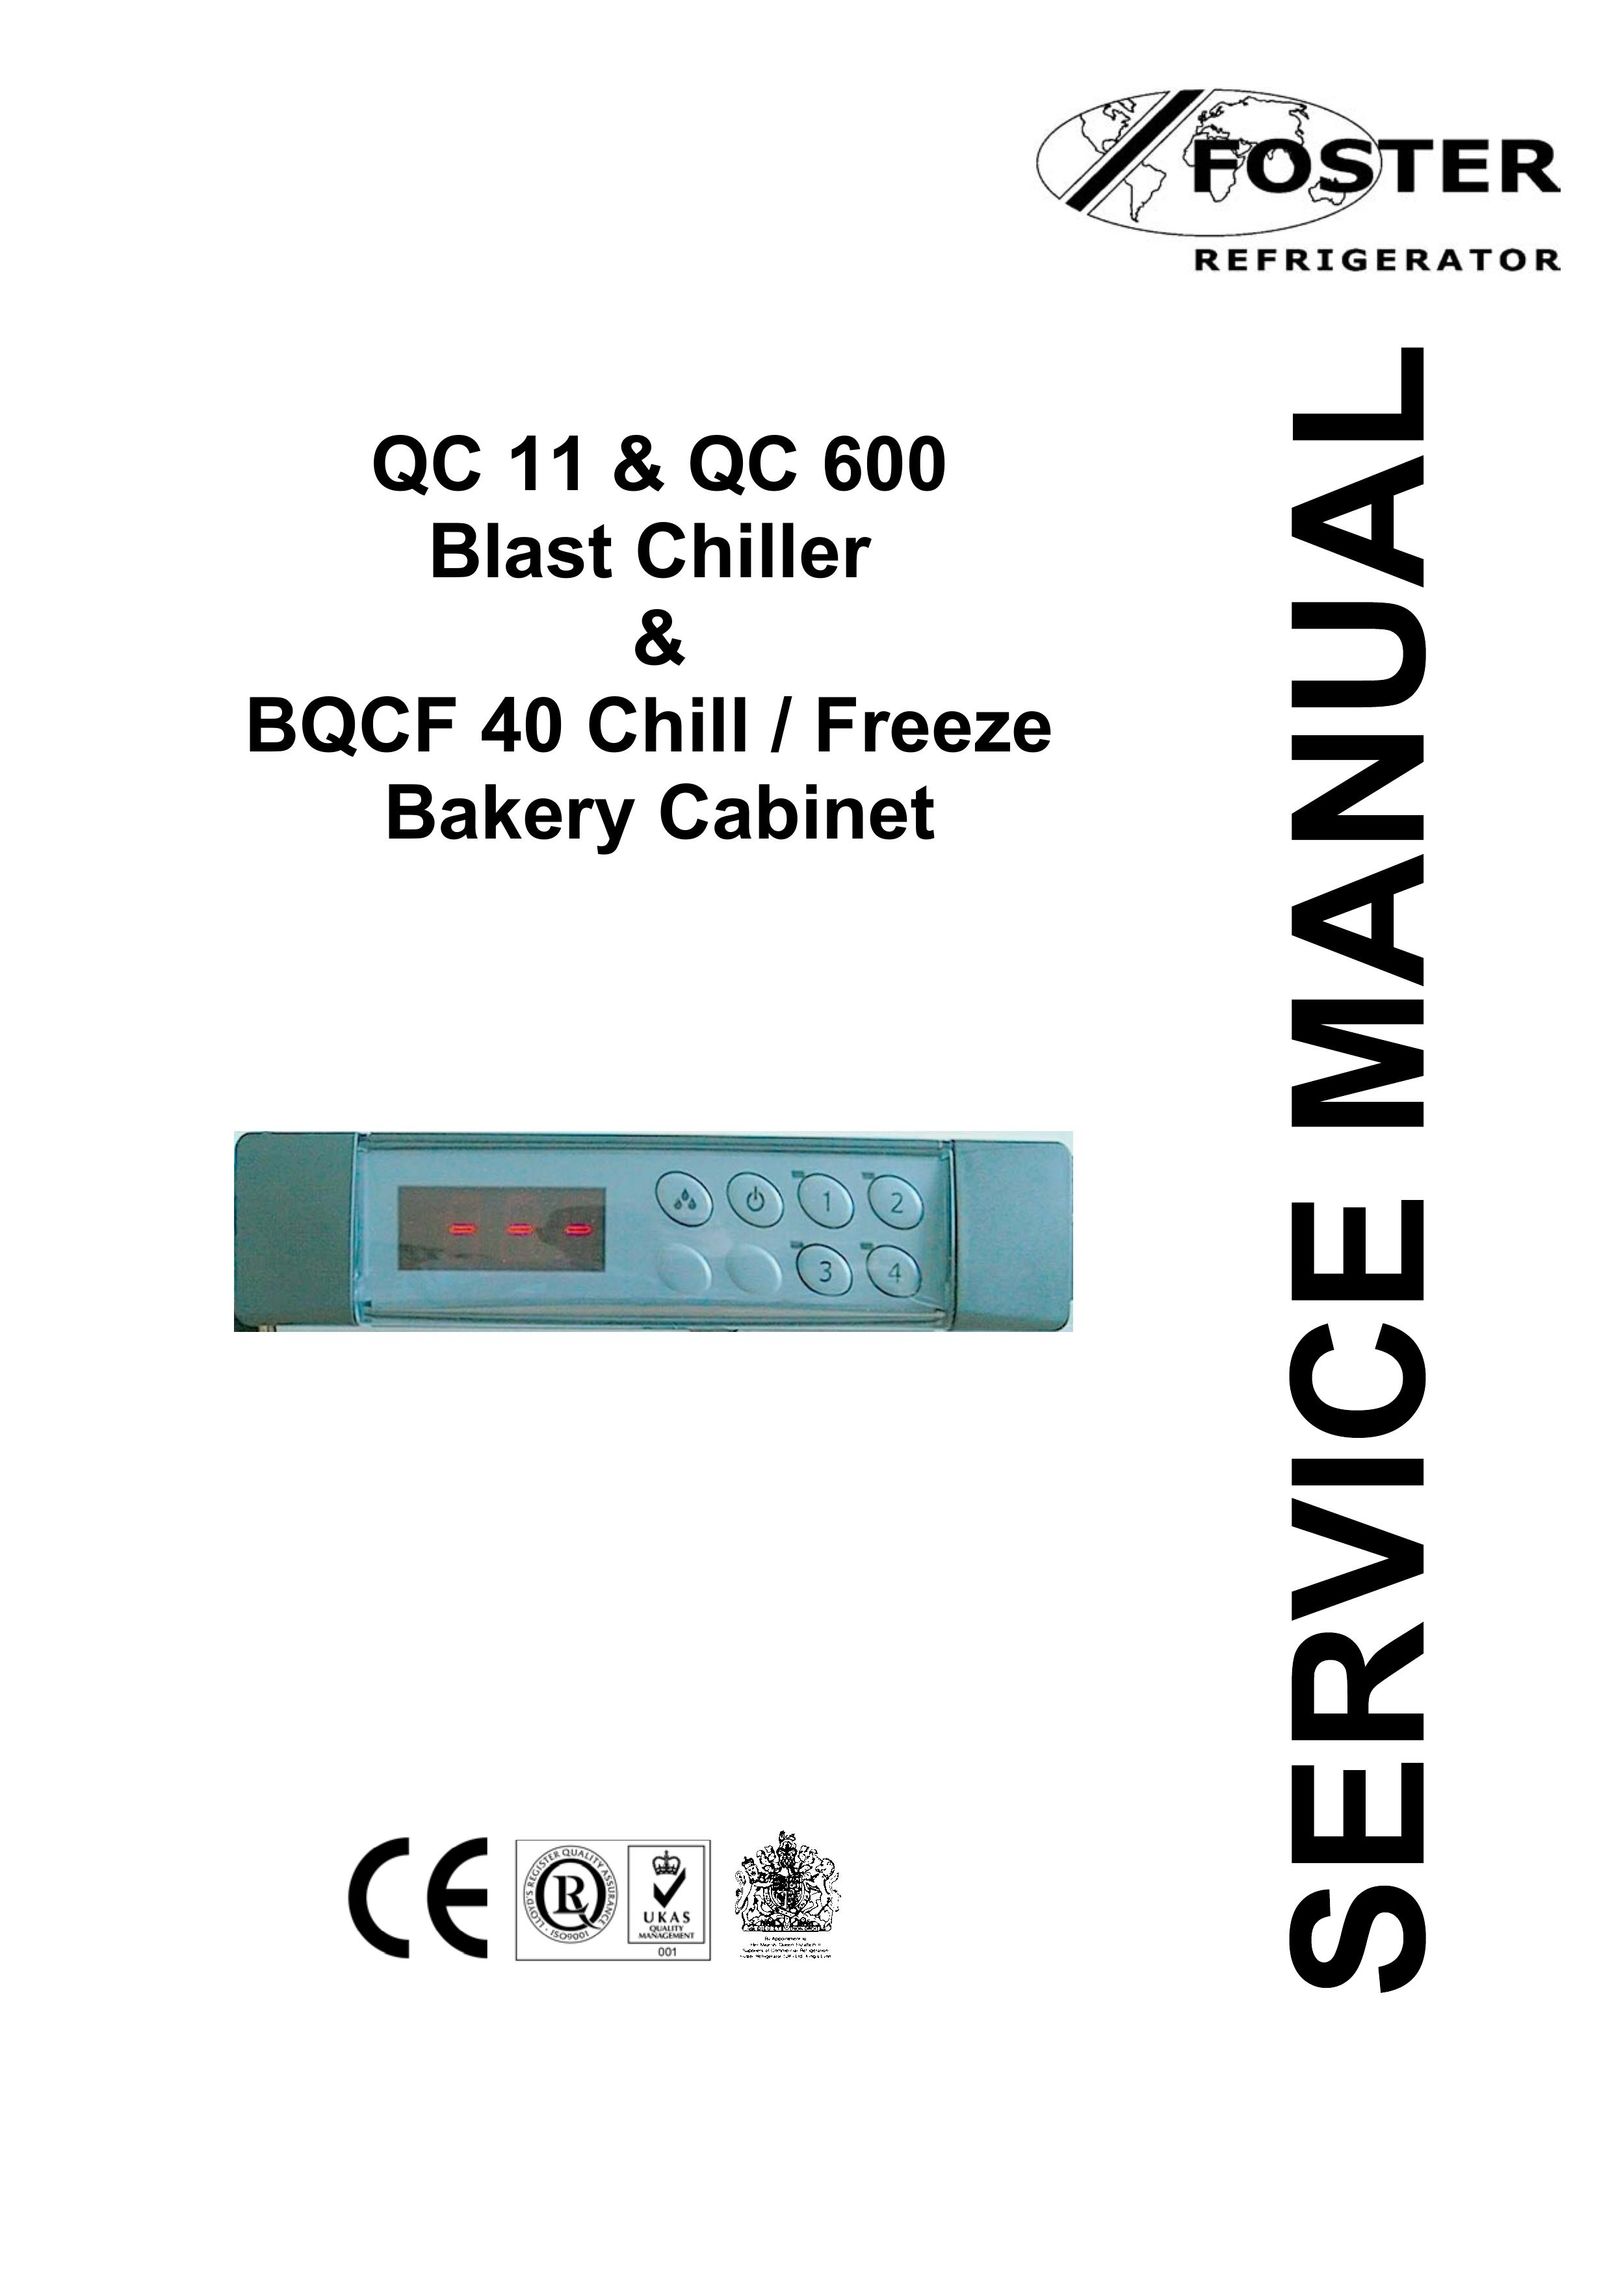 Foster BQCF 40 Freezer User Manual